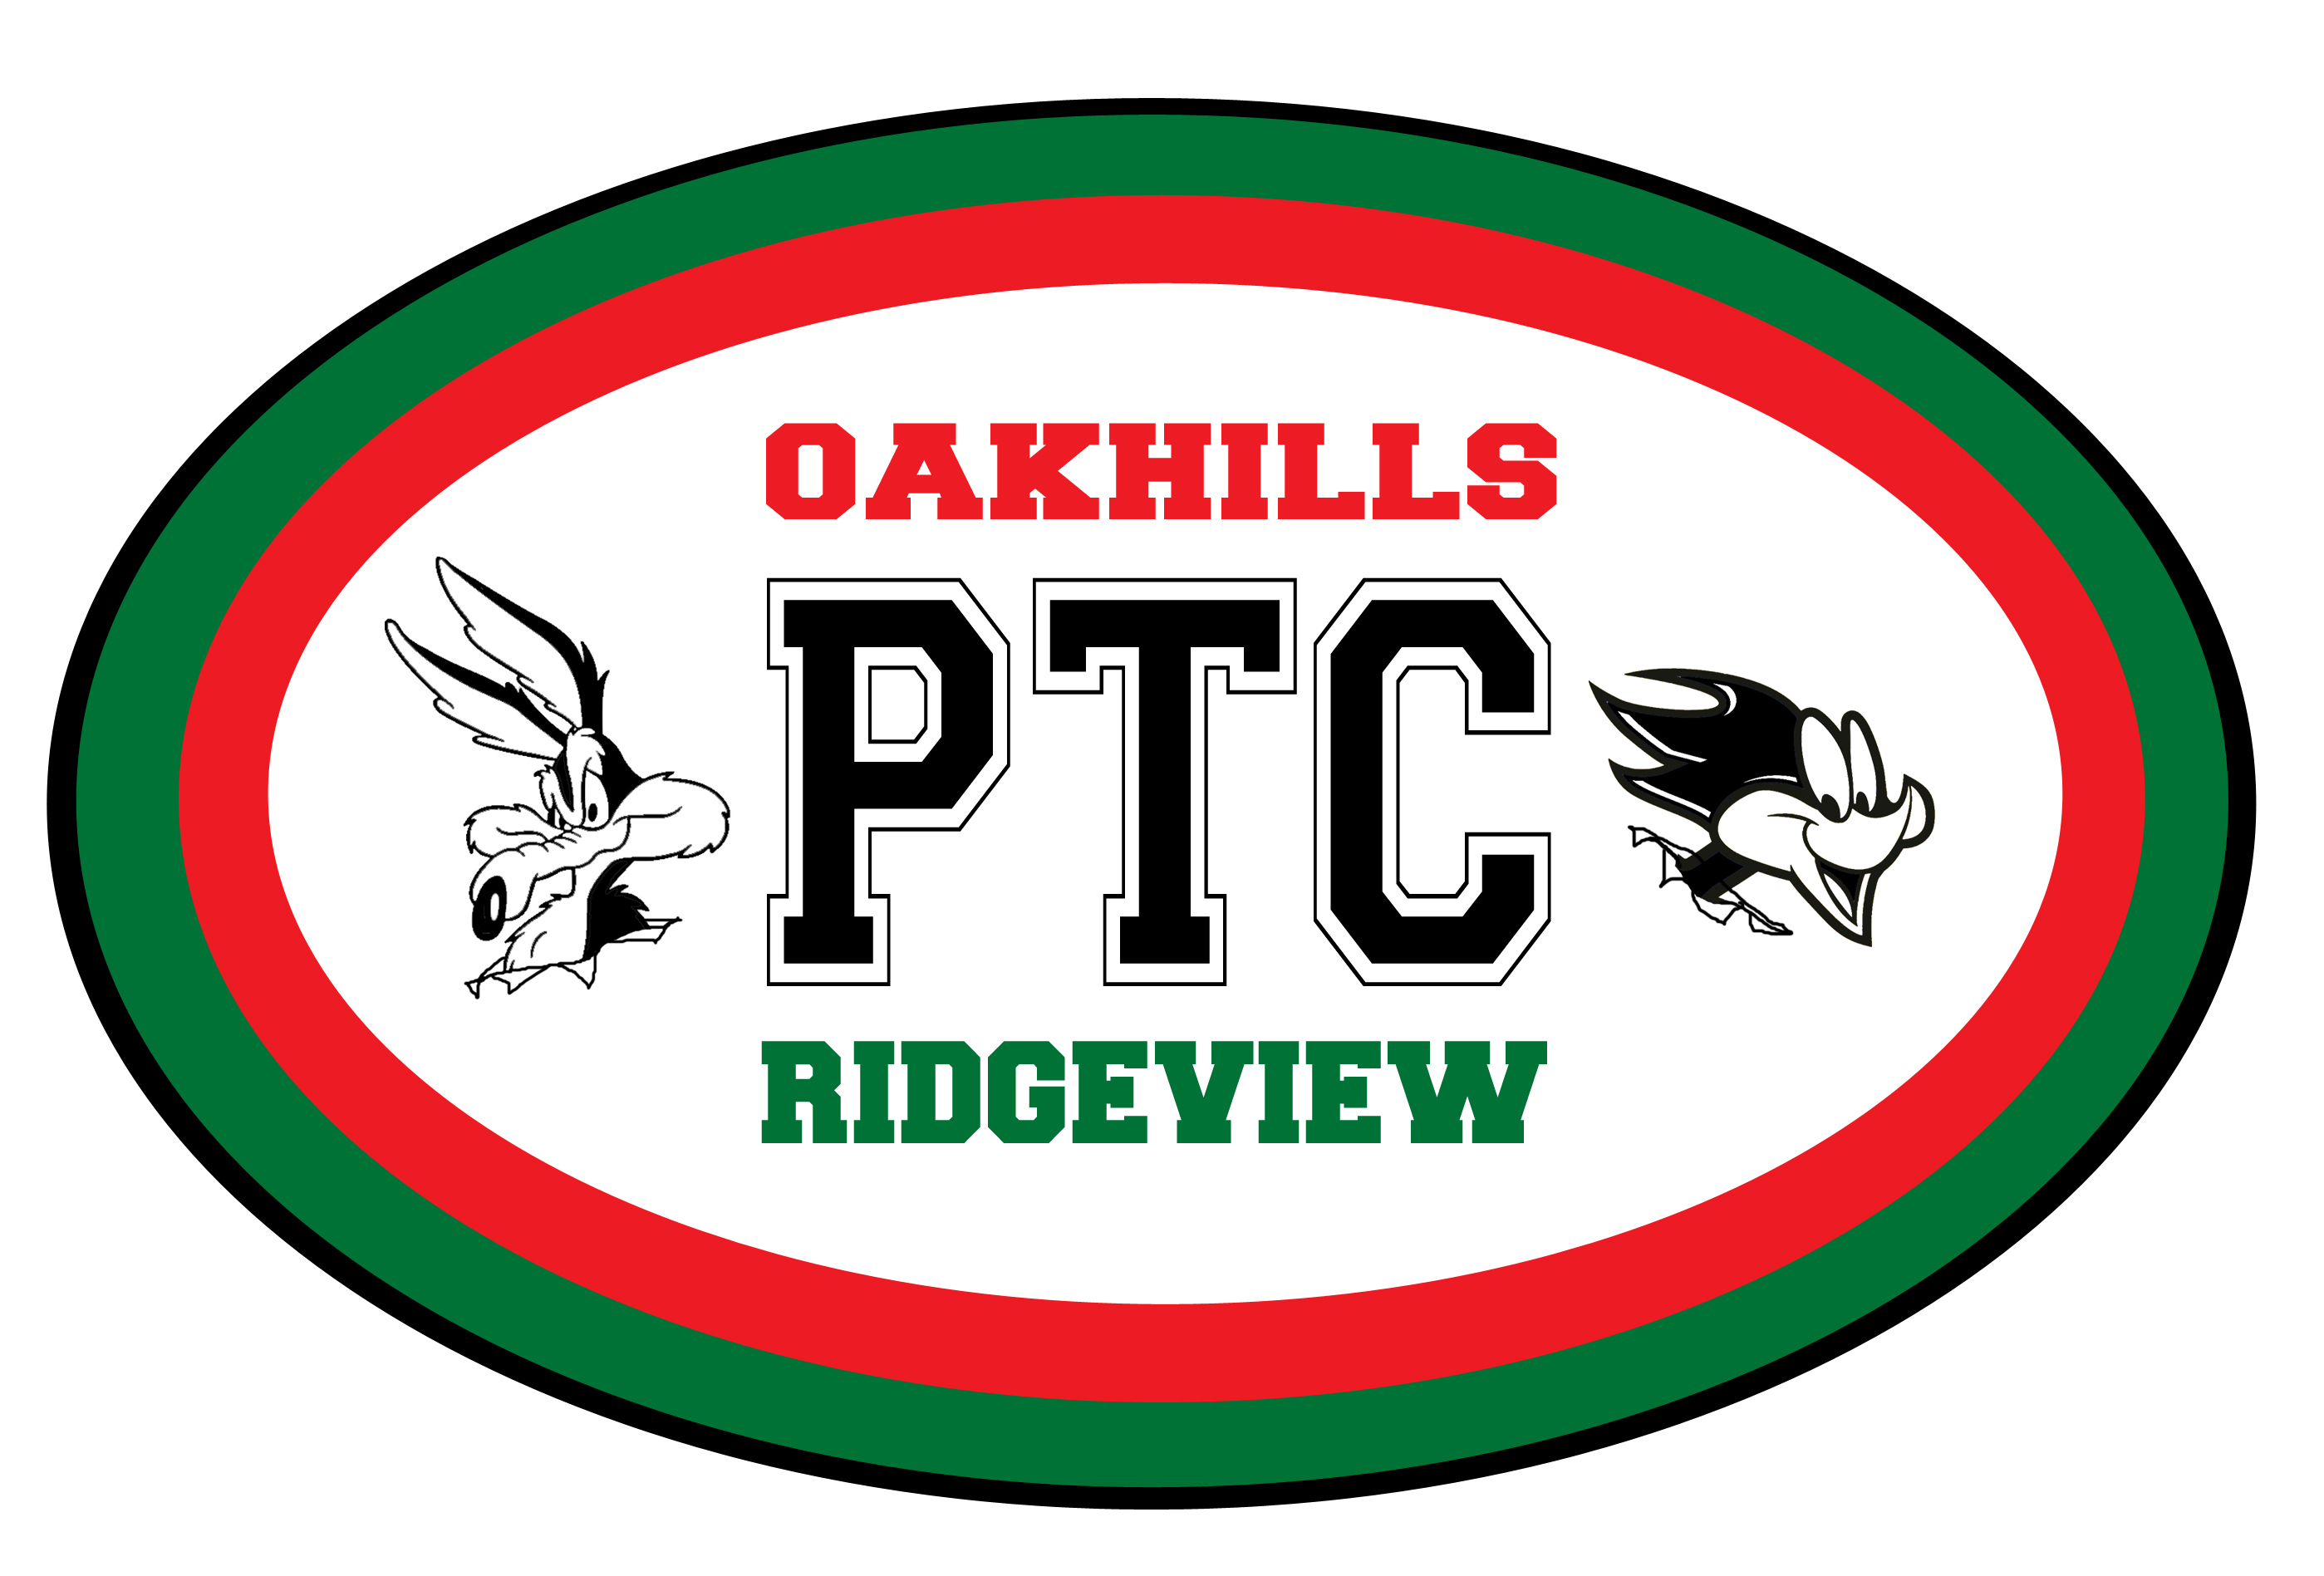 Oak Hills PTC Ridgeview